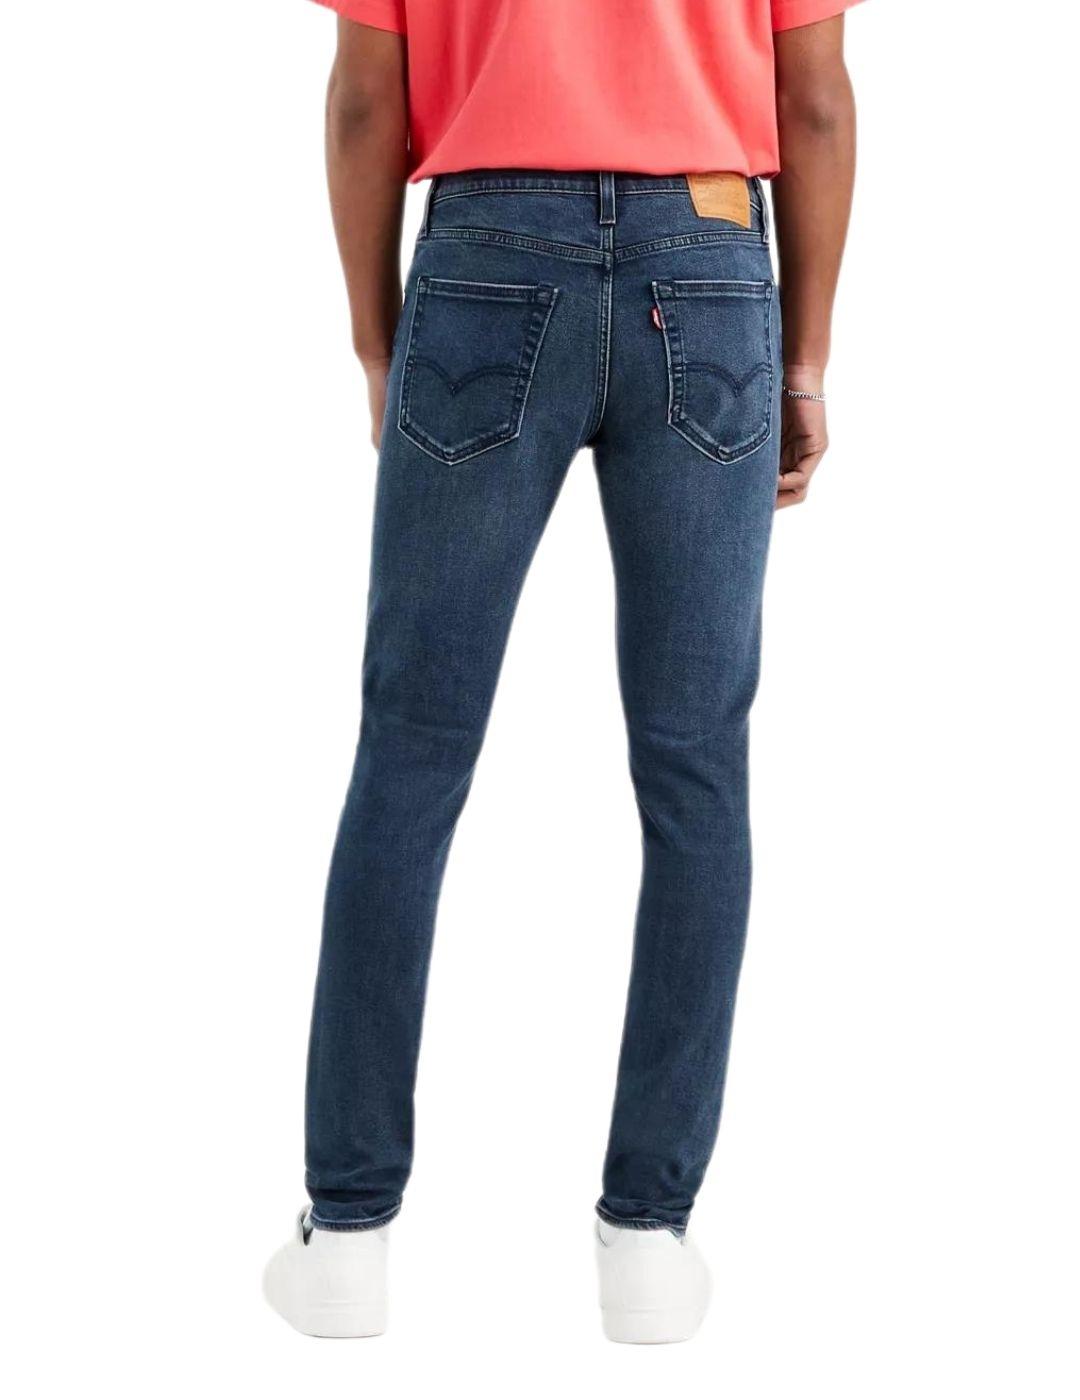 Pantalón Levis Skinny Taper Jeans Ocean Pewter Adv elásticos